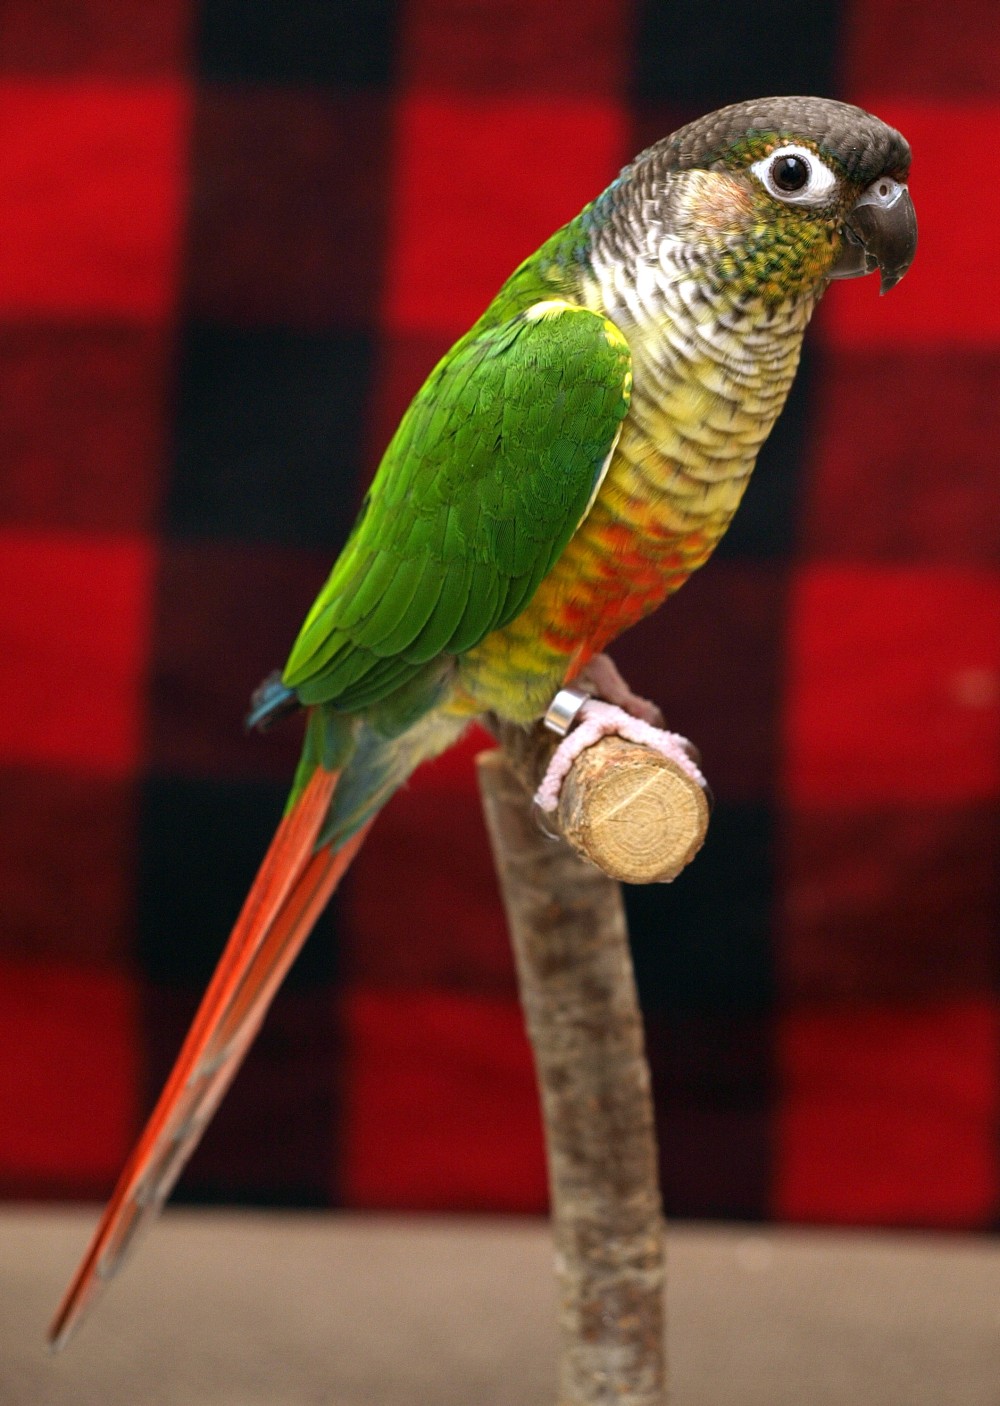 Green cheek conure parrot - how did I choose?